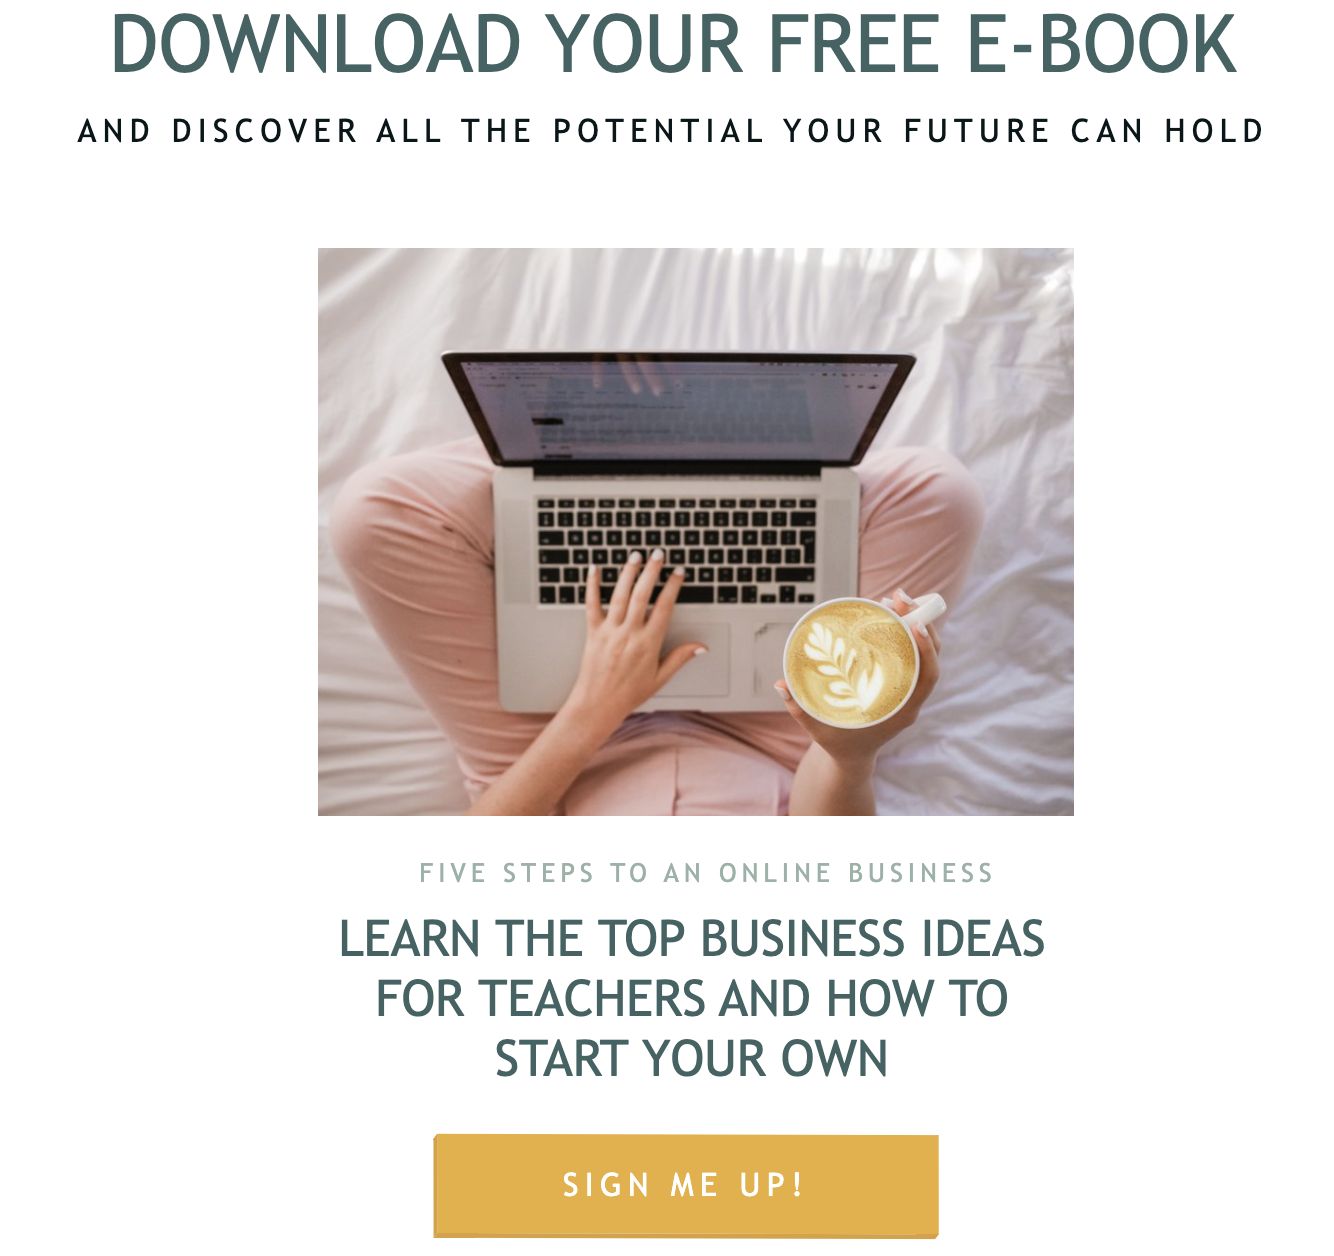 Business Ideas for Teachers: Free Ebook